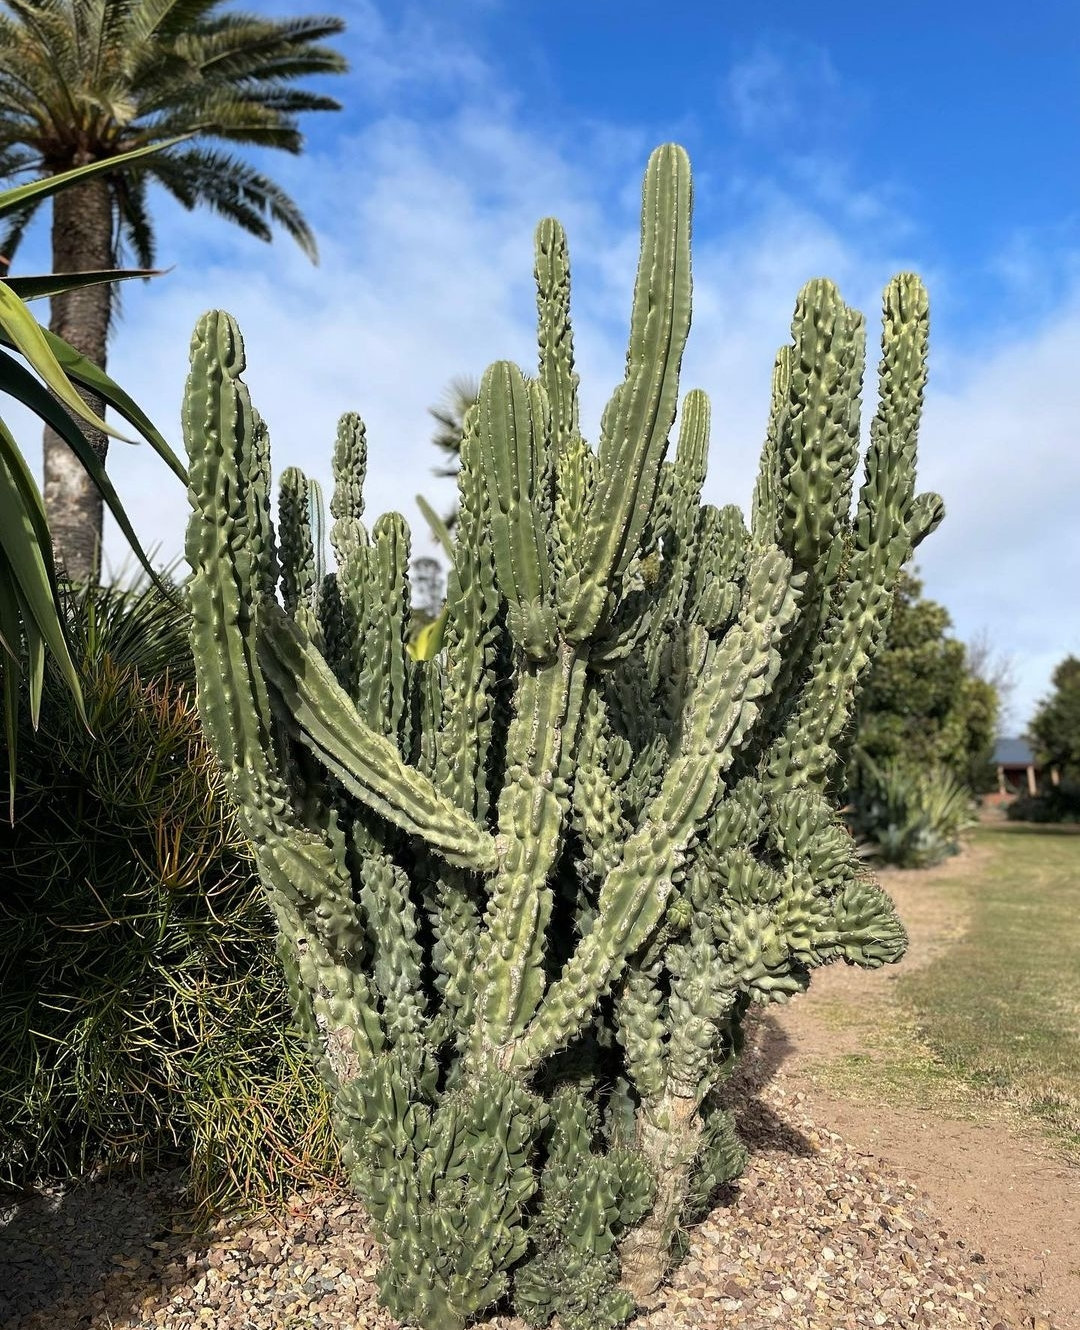 kakteen deko kaktus pflanze cactus samen - fleischfressende